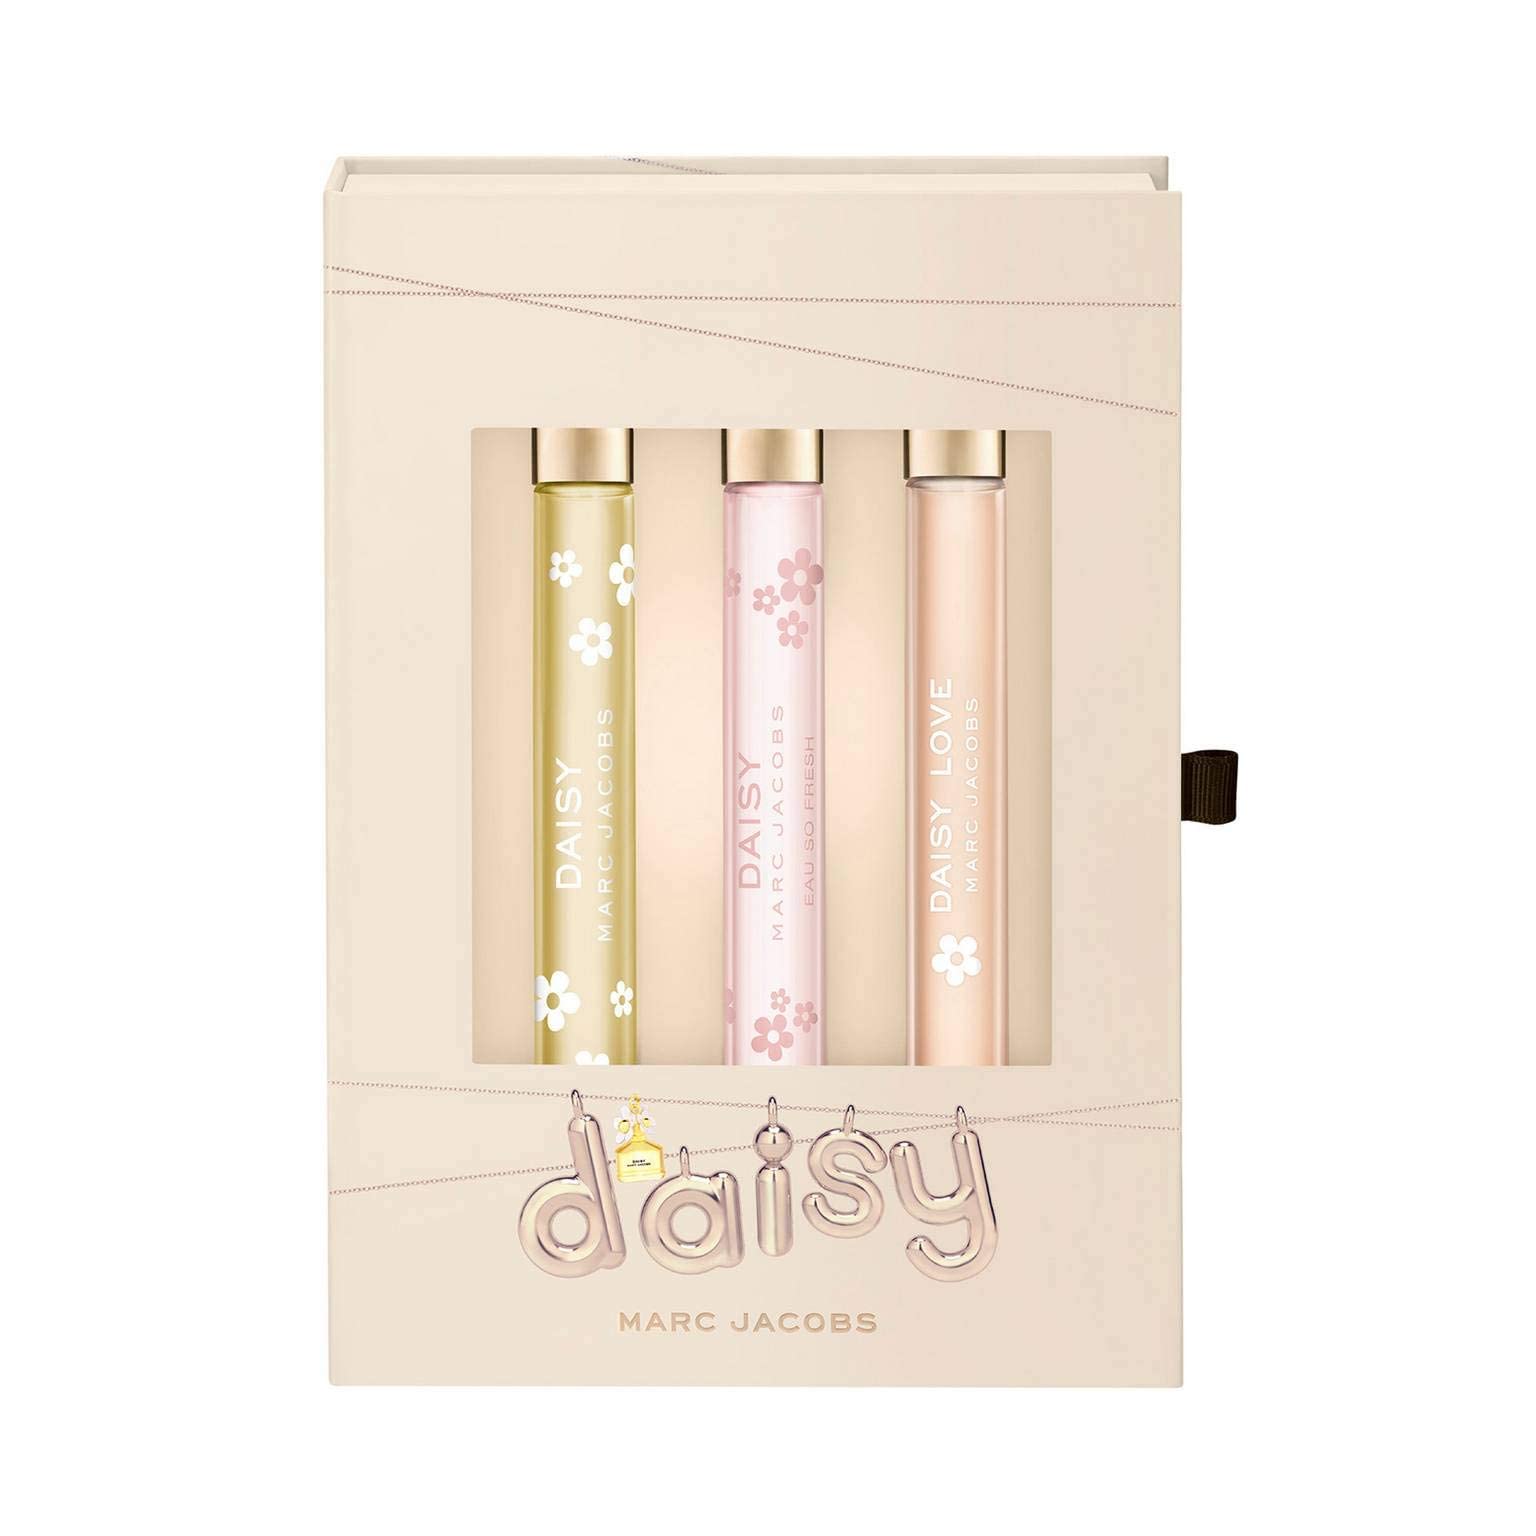 Marc Jacobs Daisy Multiline Trio Spray 2020 Gift Set 3x10ml (10ml Daisy, 10ml Daisy Eau So Fresh, 10ml Daisy Love)